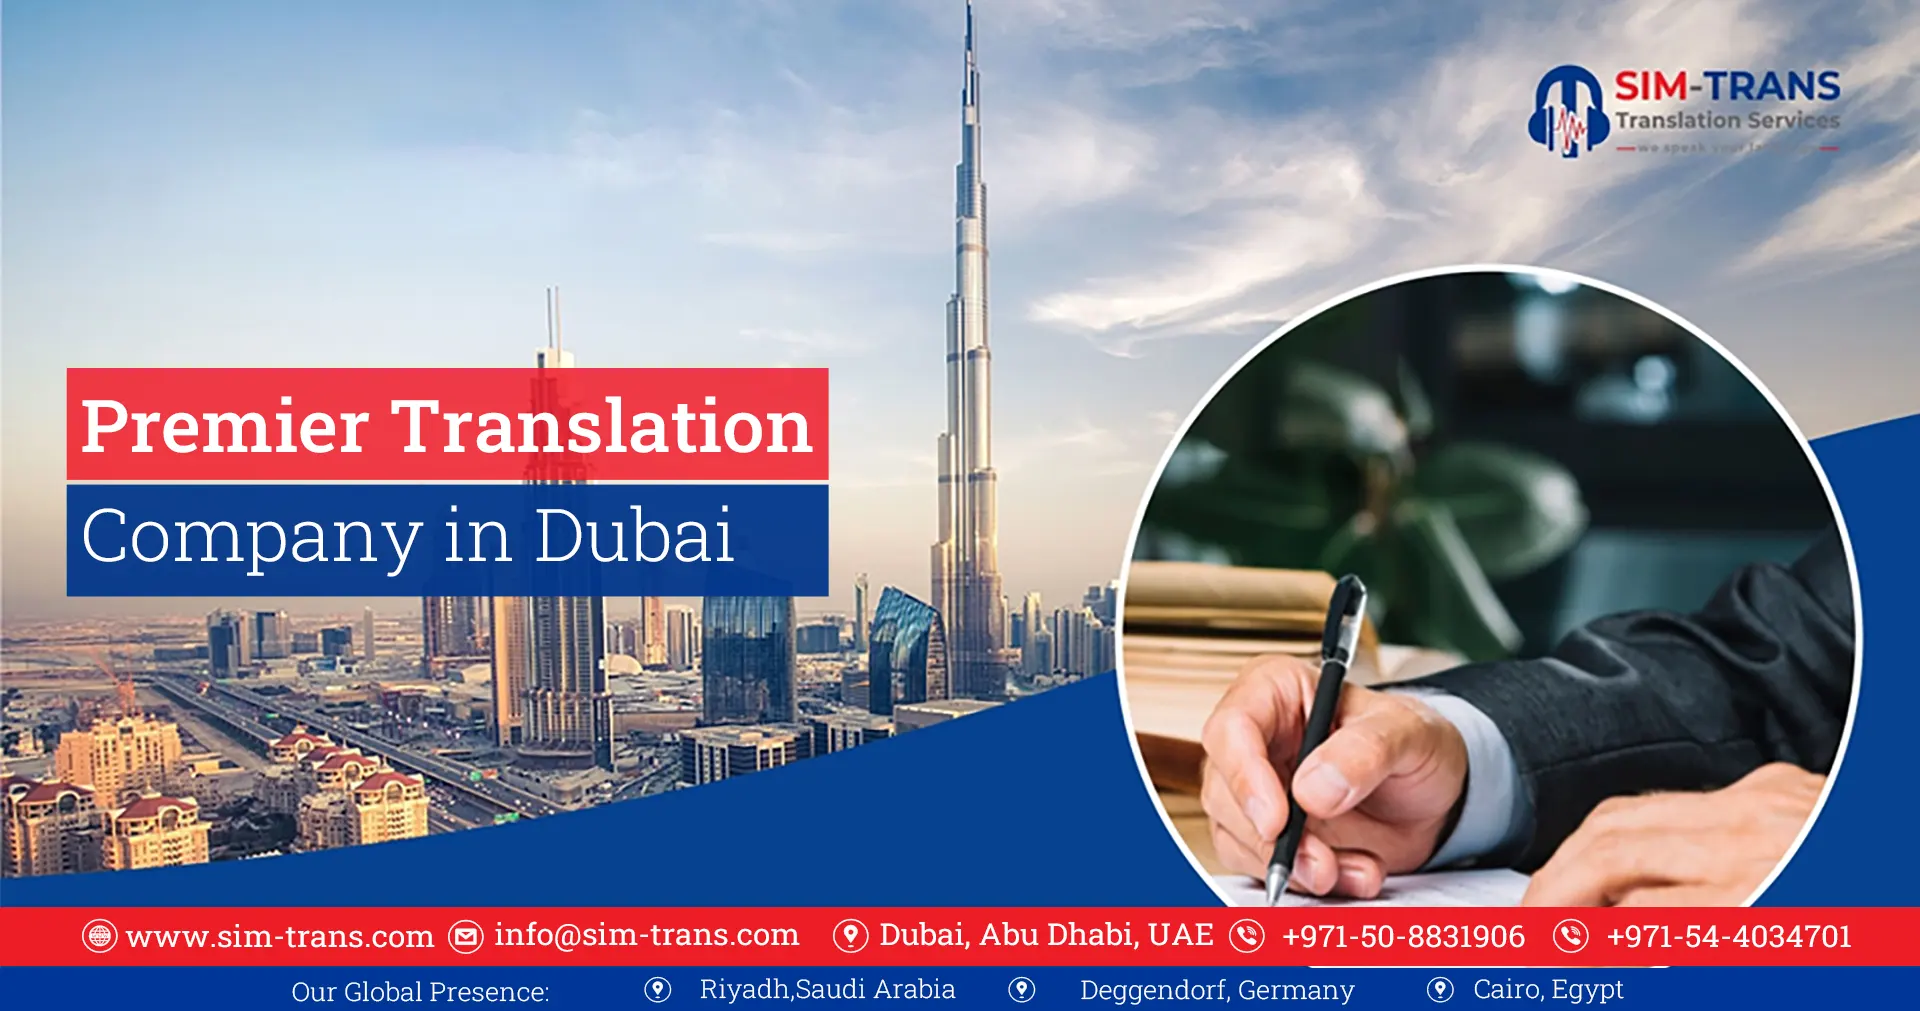 Premier Translation Company in Dubai